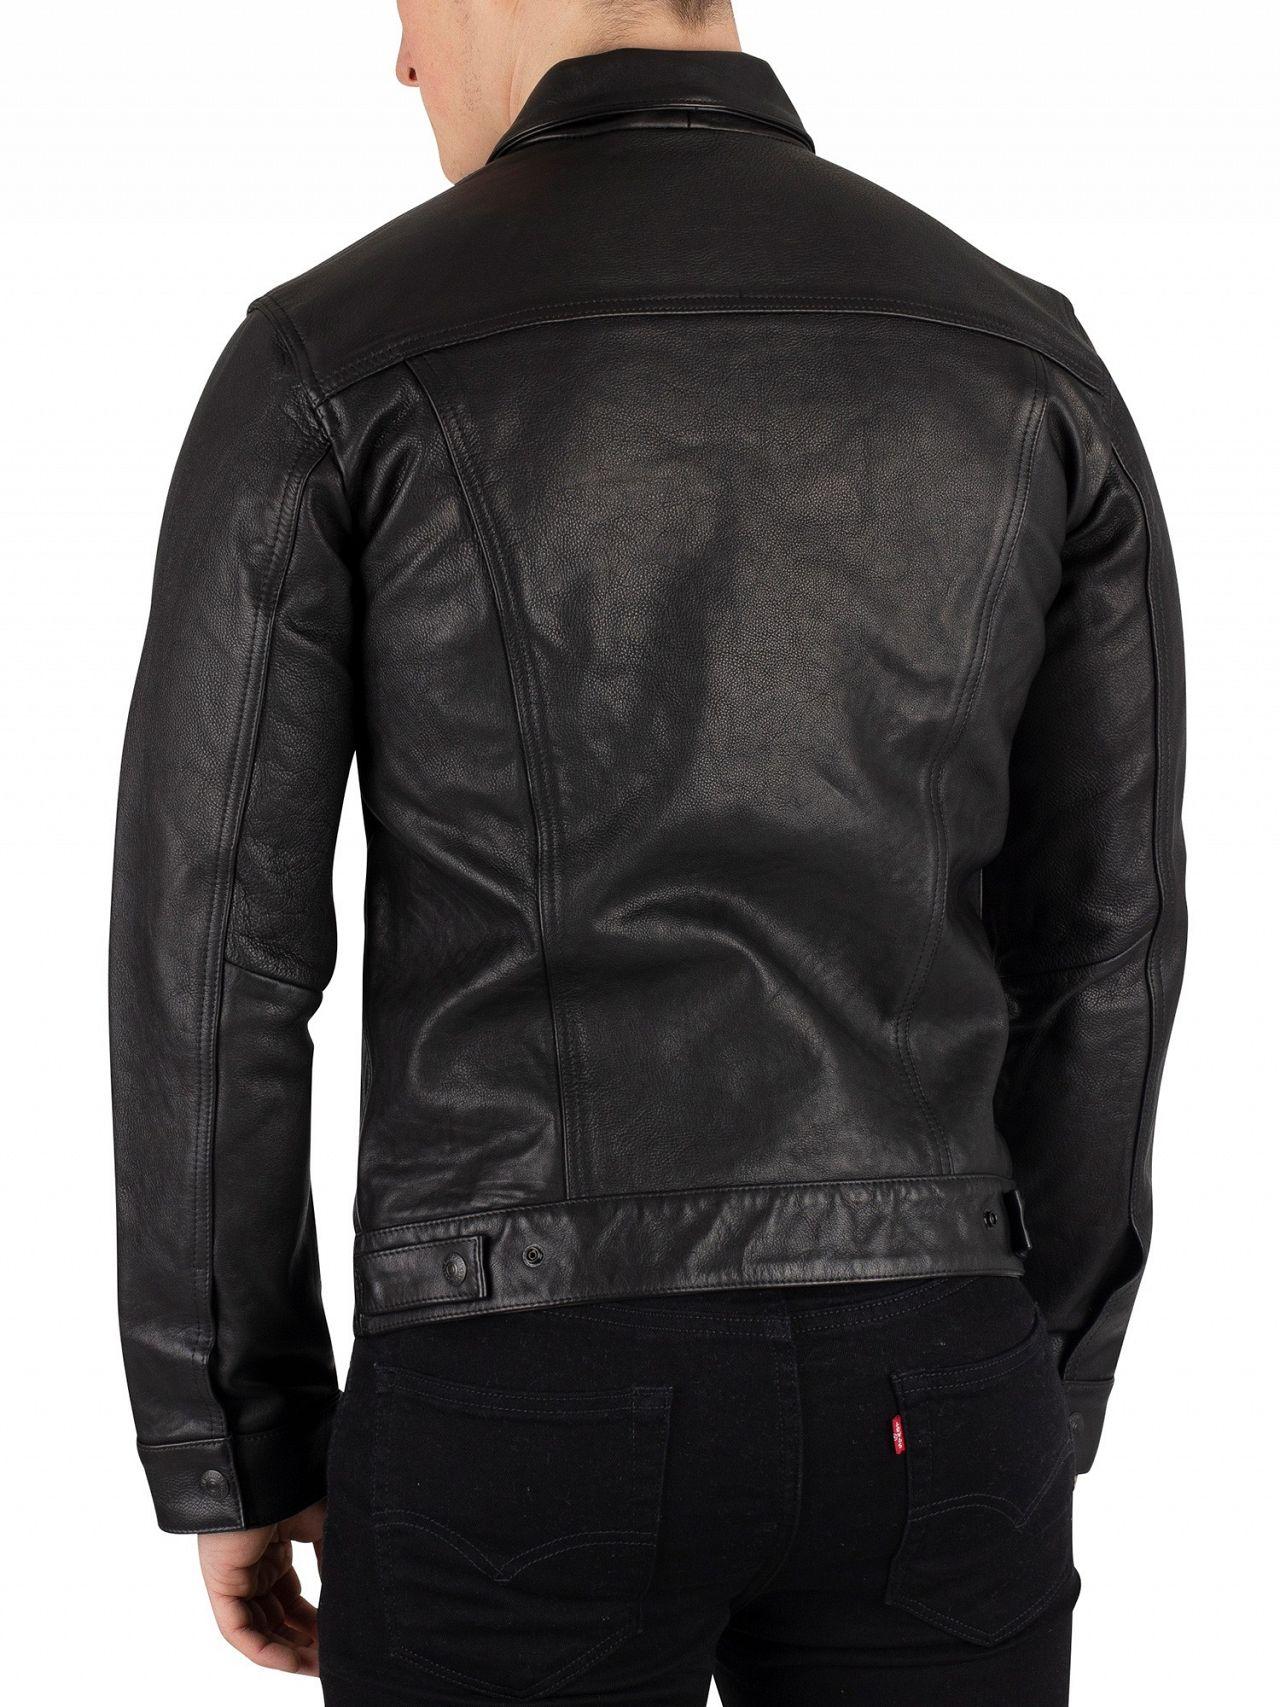 Levi's Type 3 Black Leather Trucker Jacket for Men - Lyst